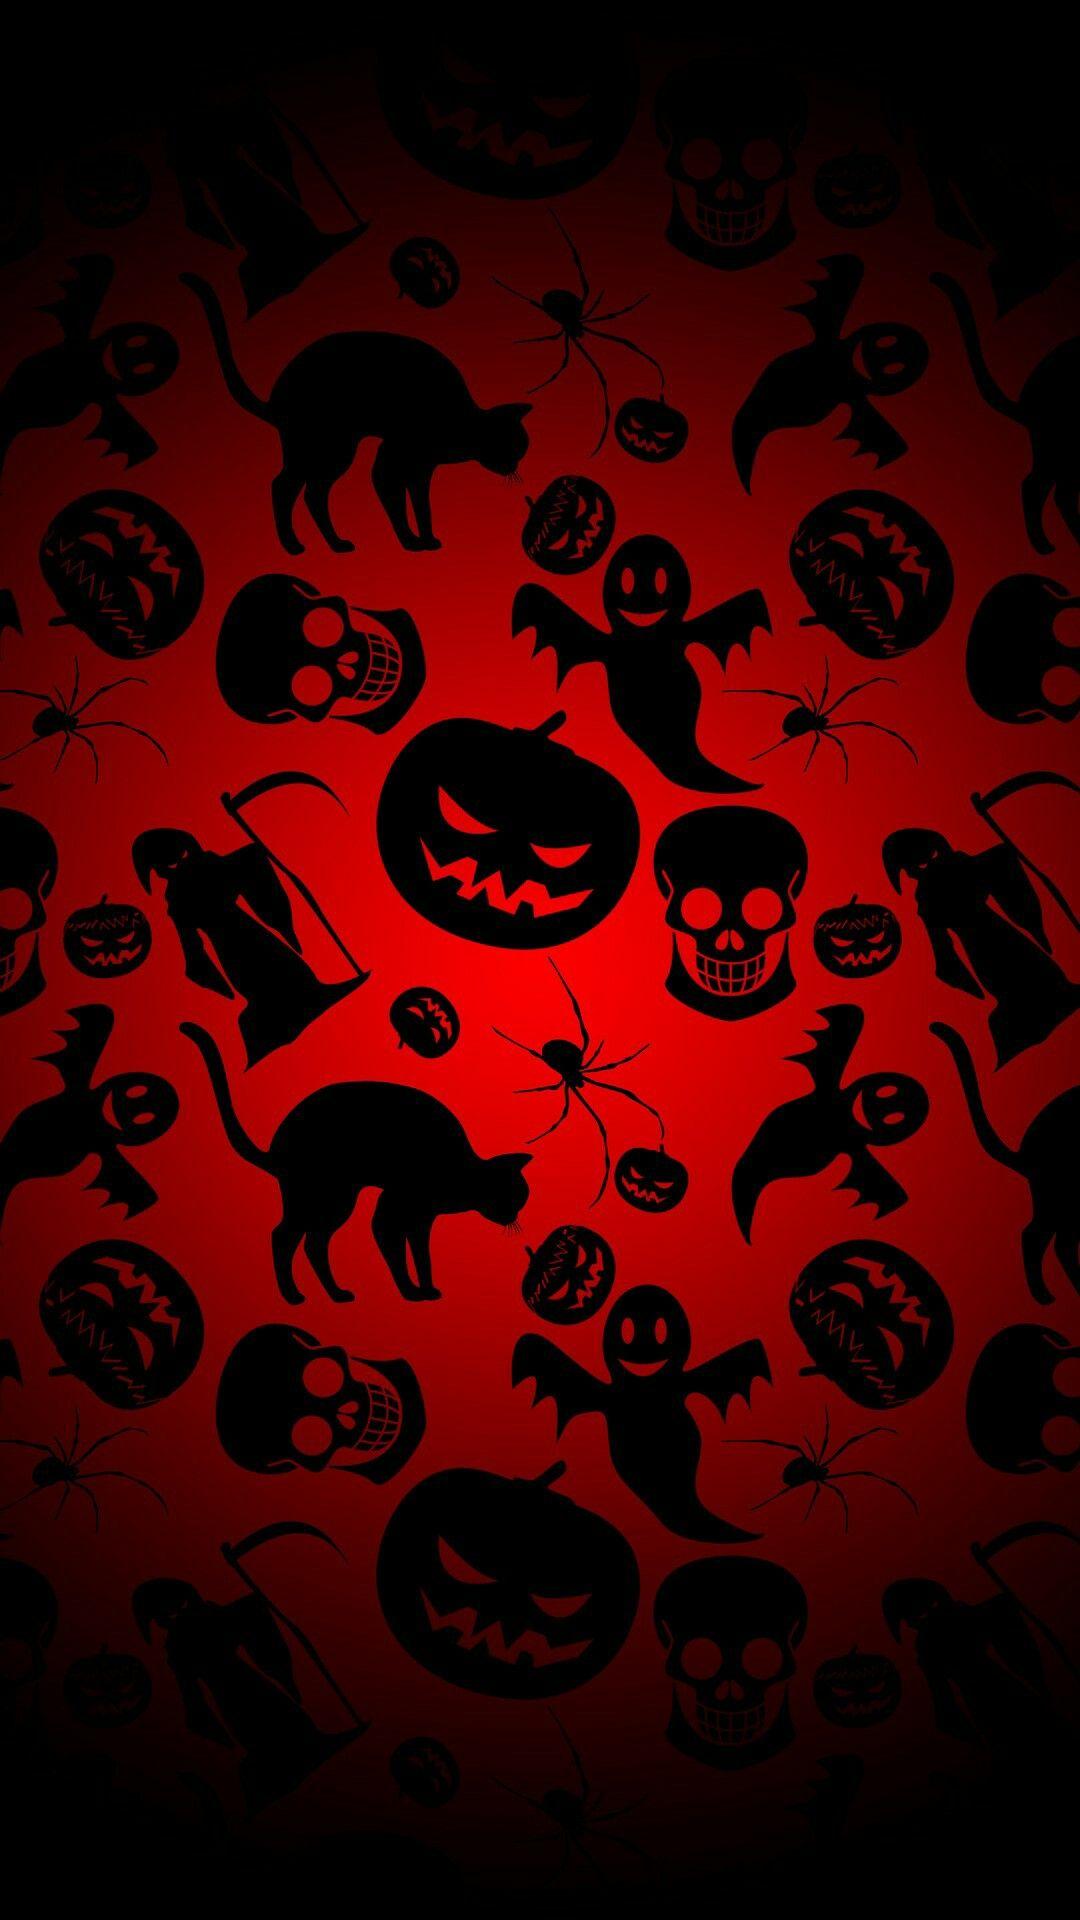 Holidays. Halloween wallpaper iphone, Halloween wallpaper, Scary wallpaper